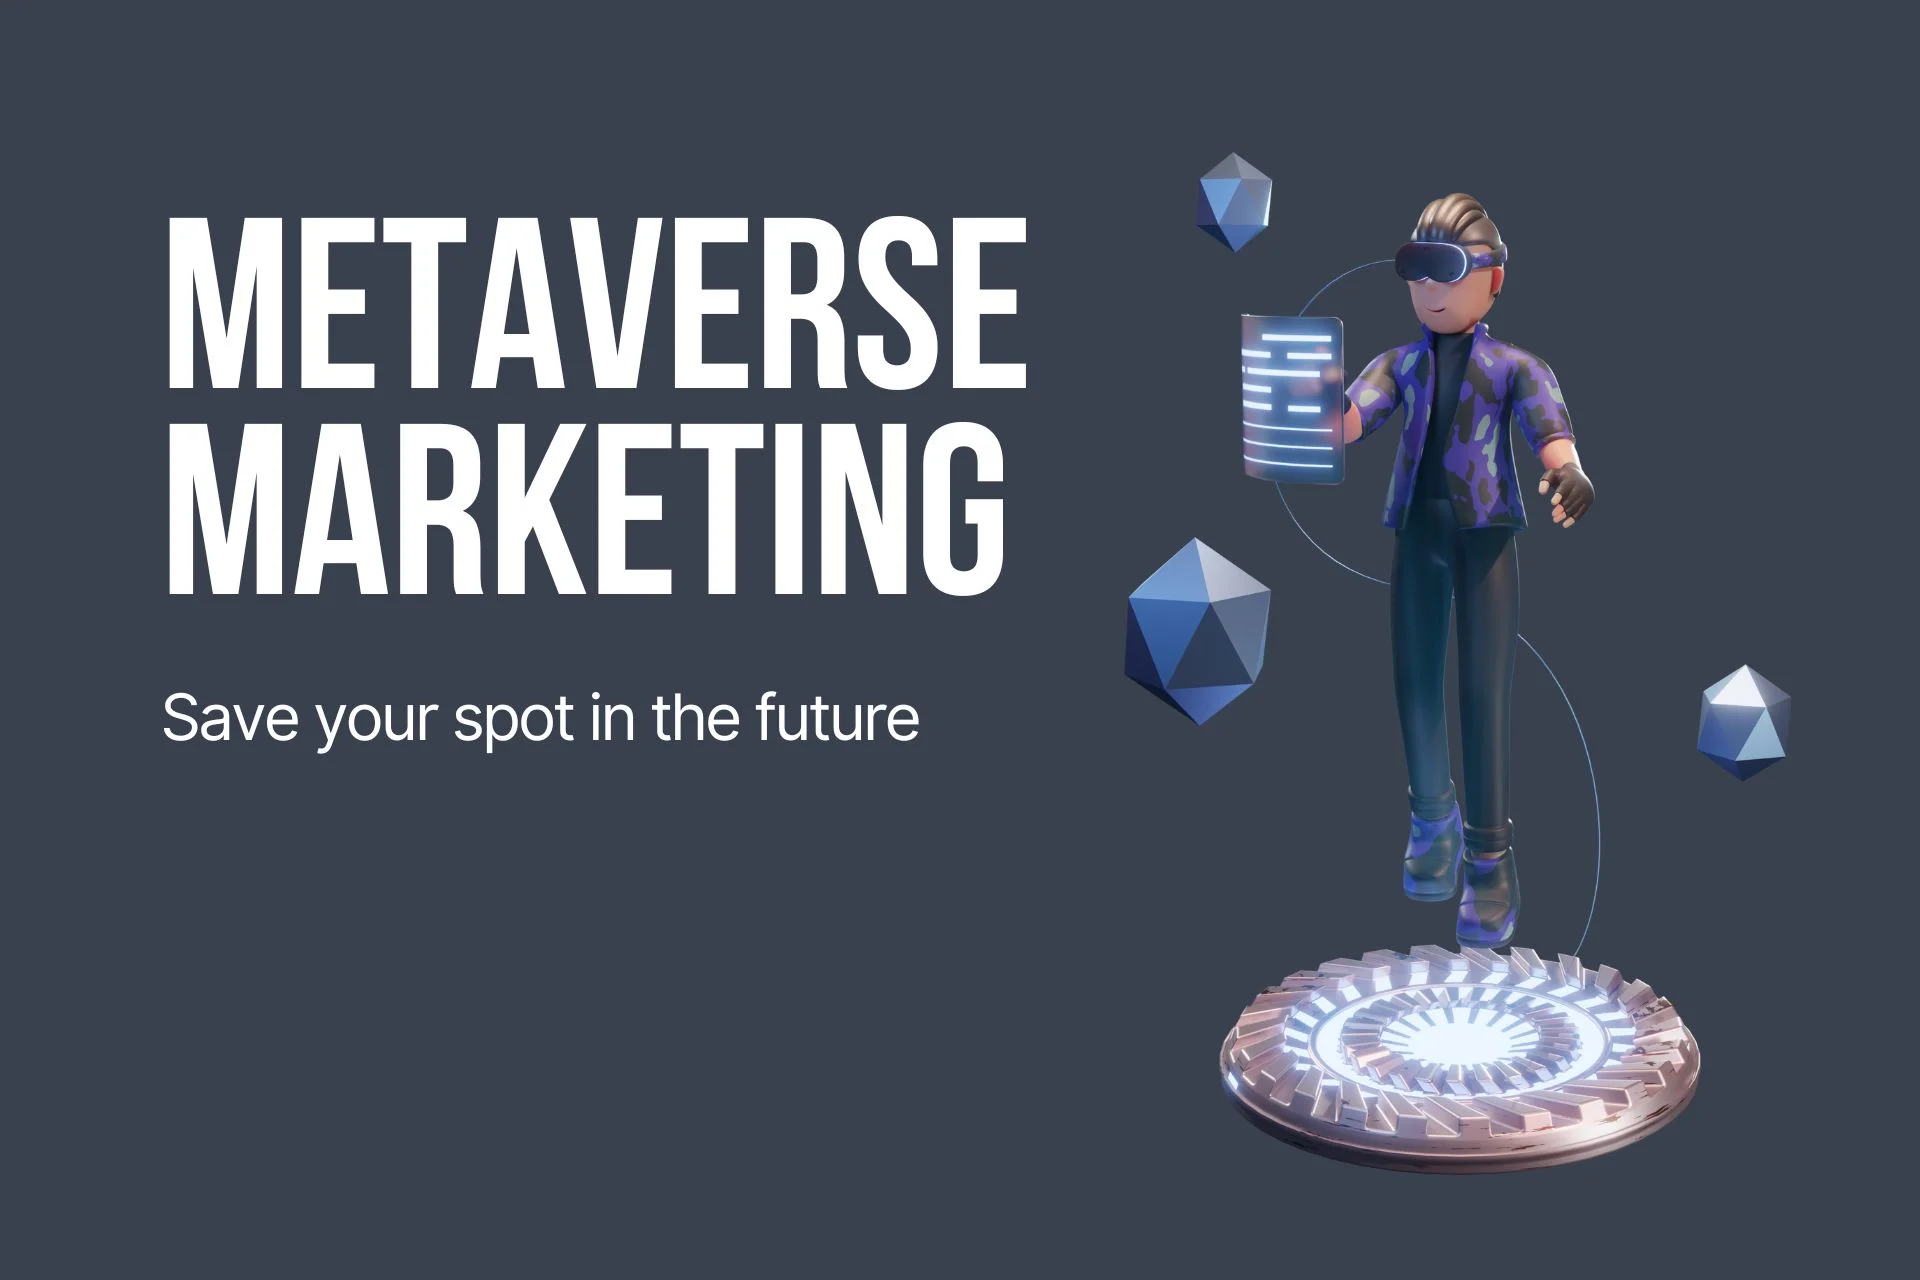 Metaverse Publicidade; Tipos de Marketing & Exemplos Metaverse